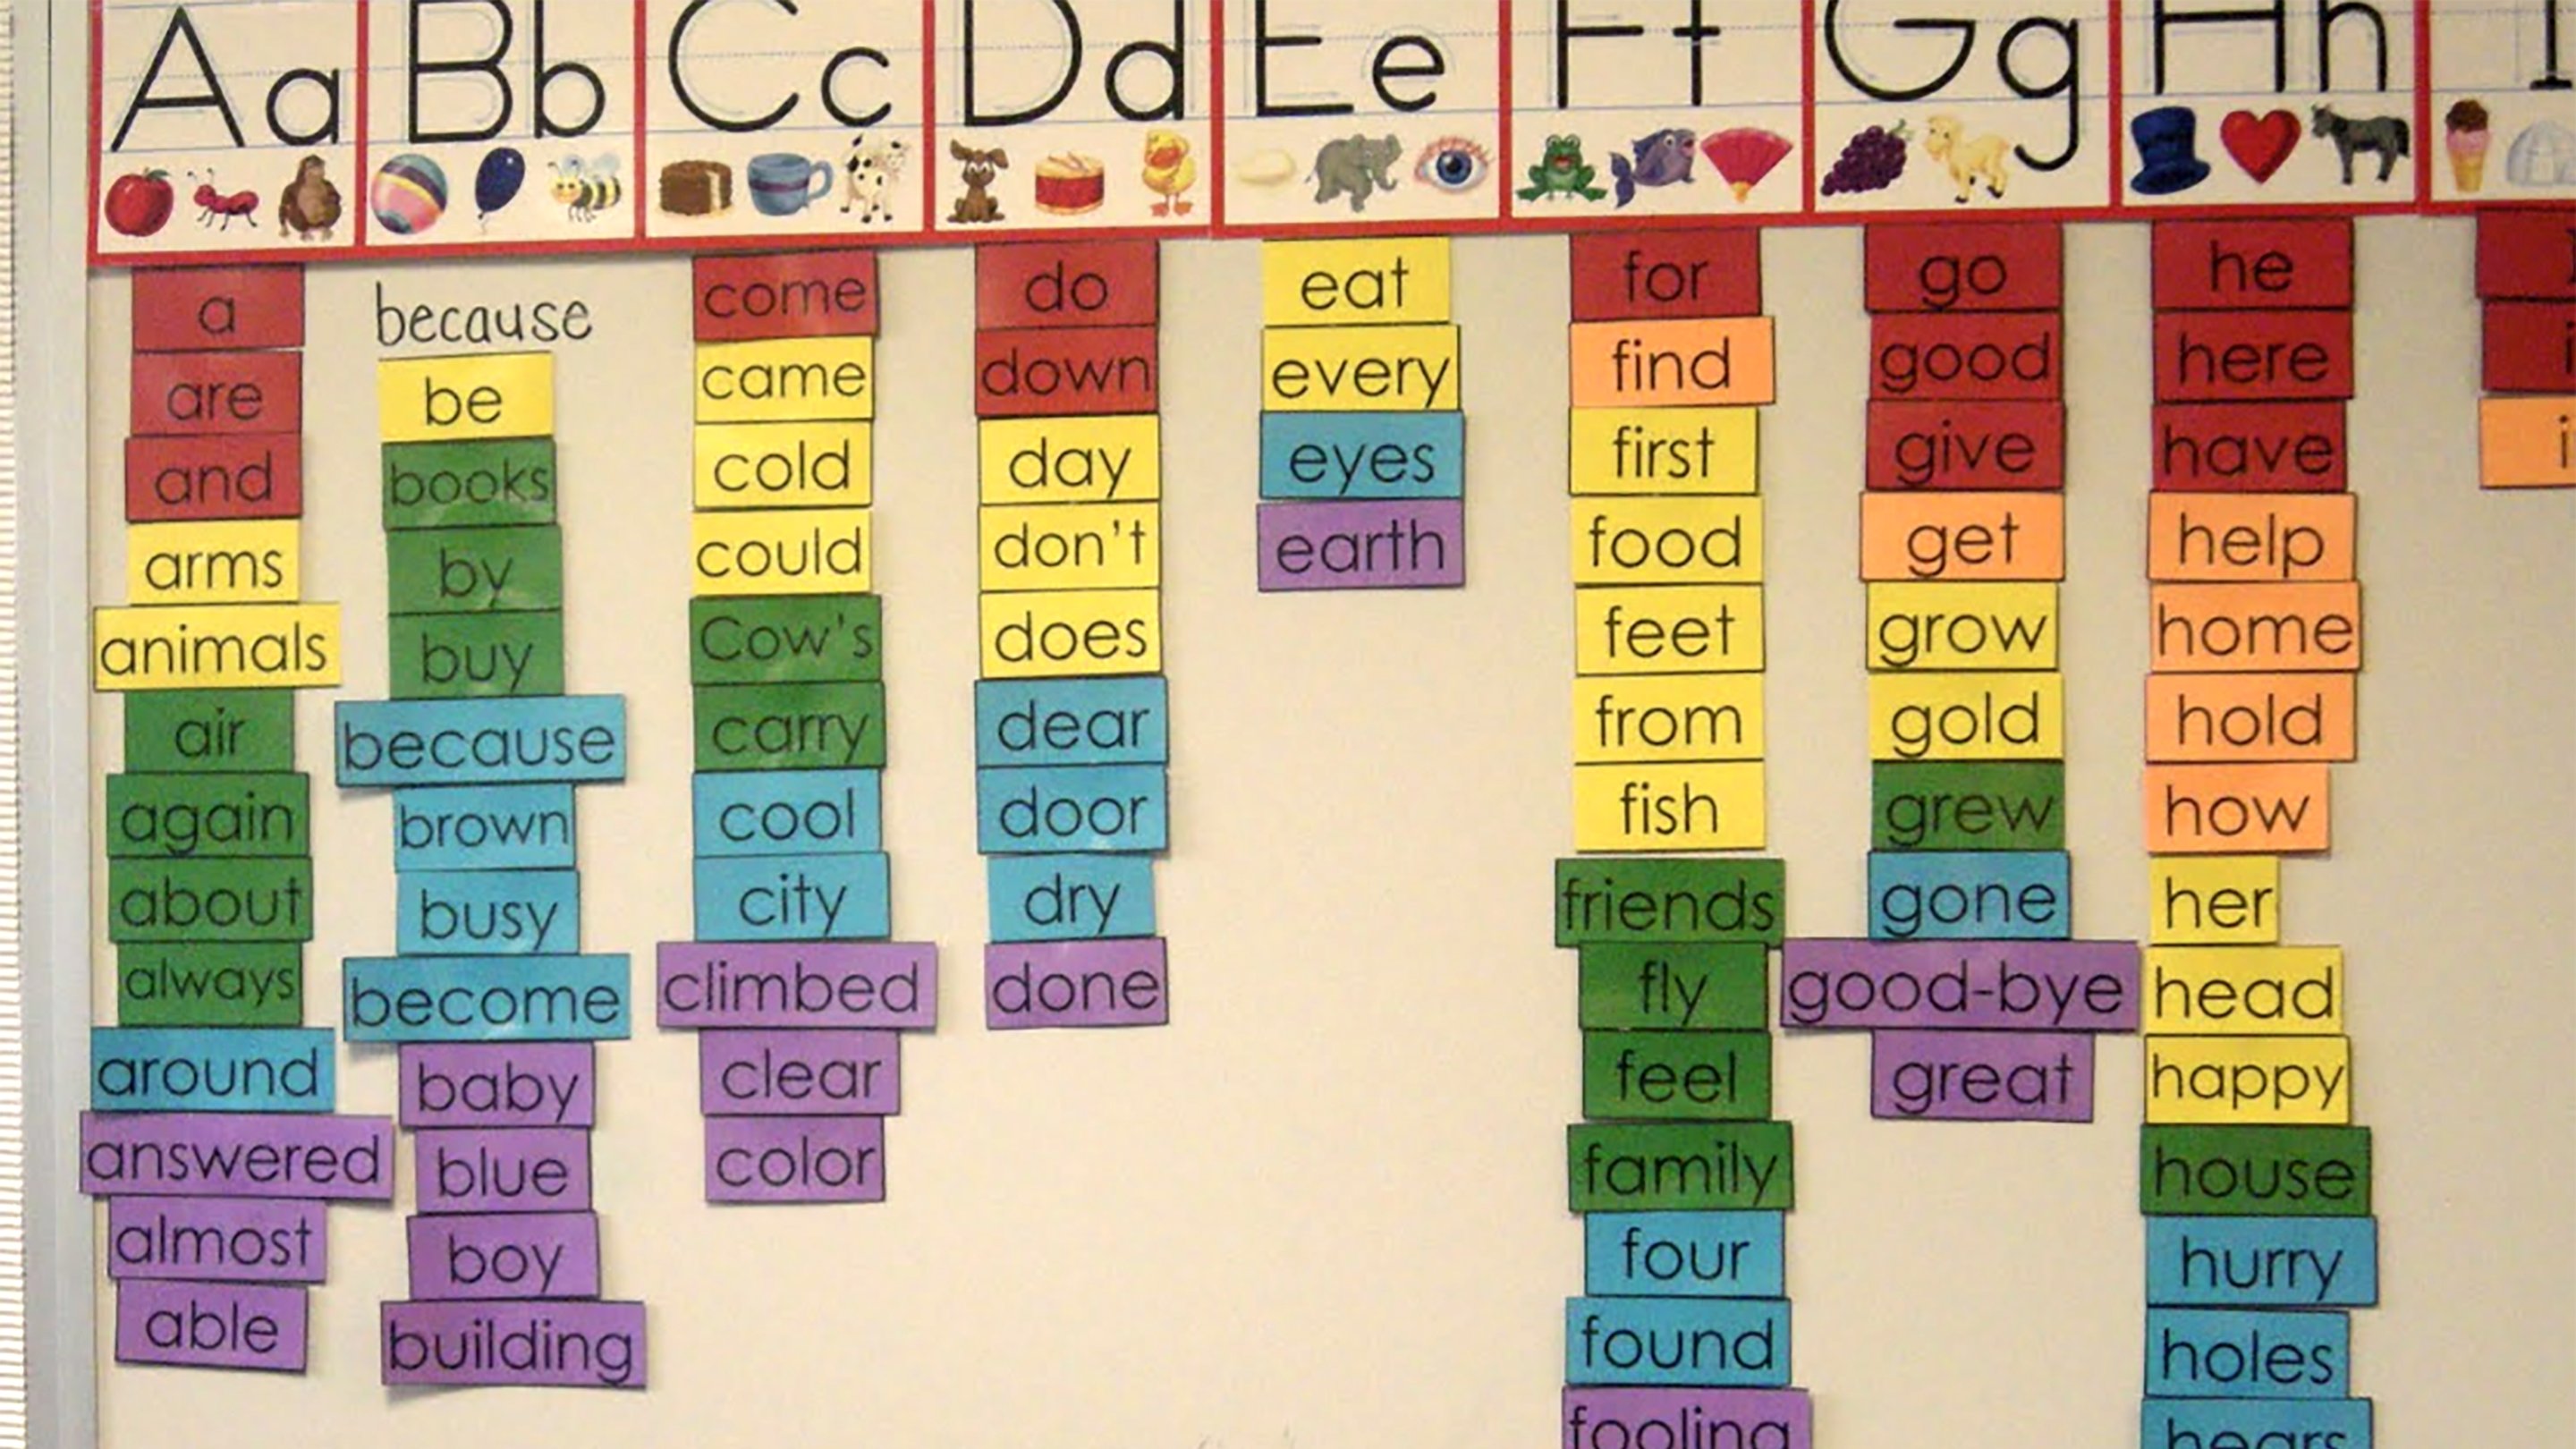 2nd Grade Math Word Wall Vocabulary Cards  Math words, Math word walls,  2nd grade math